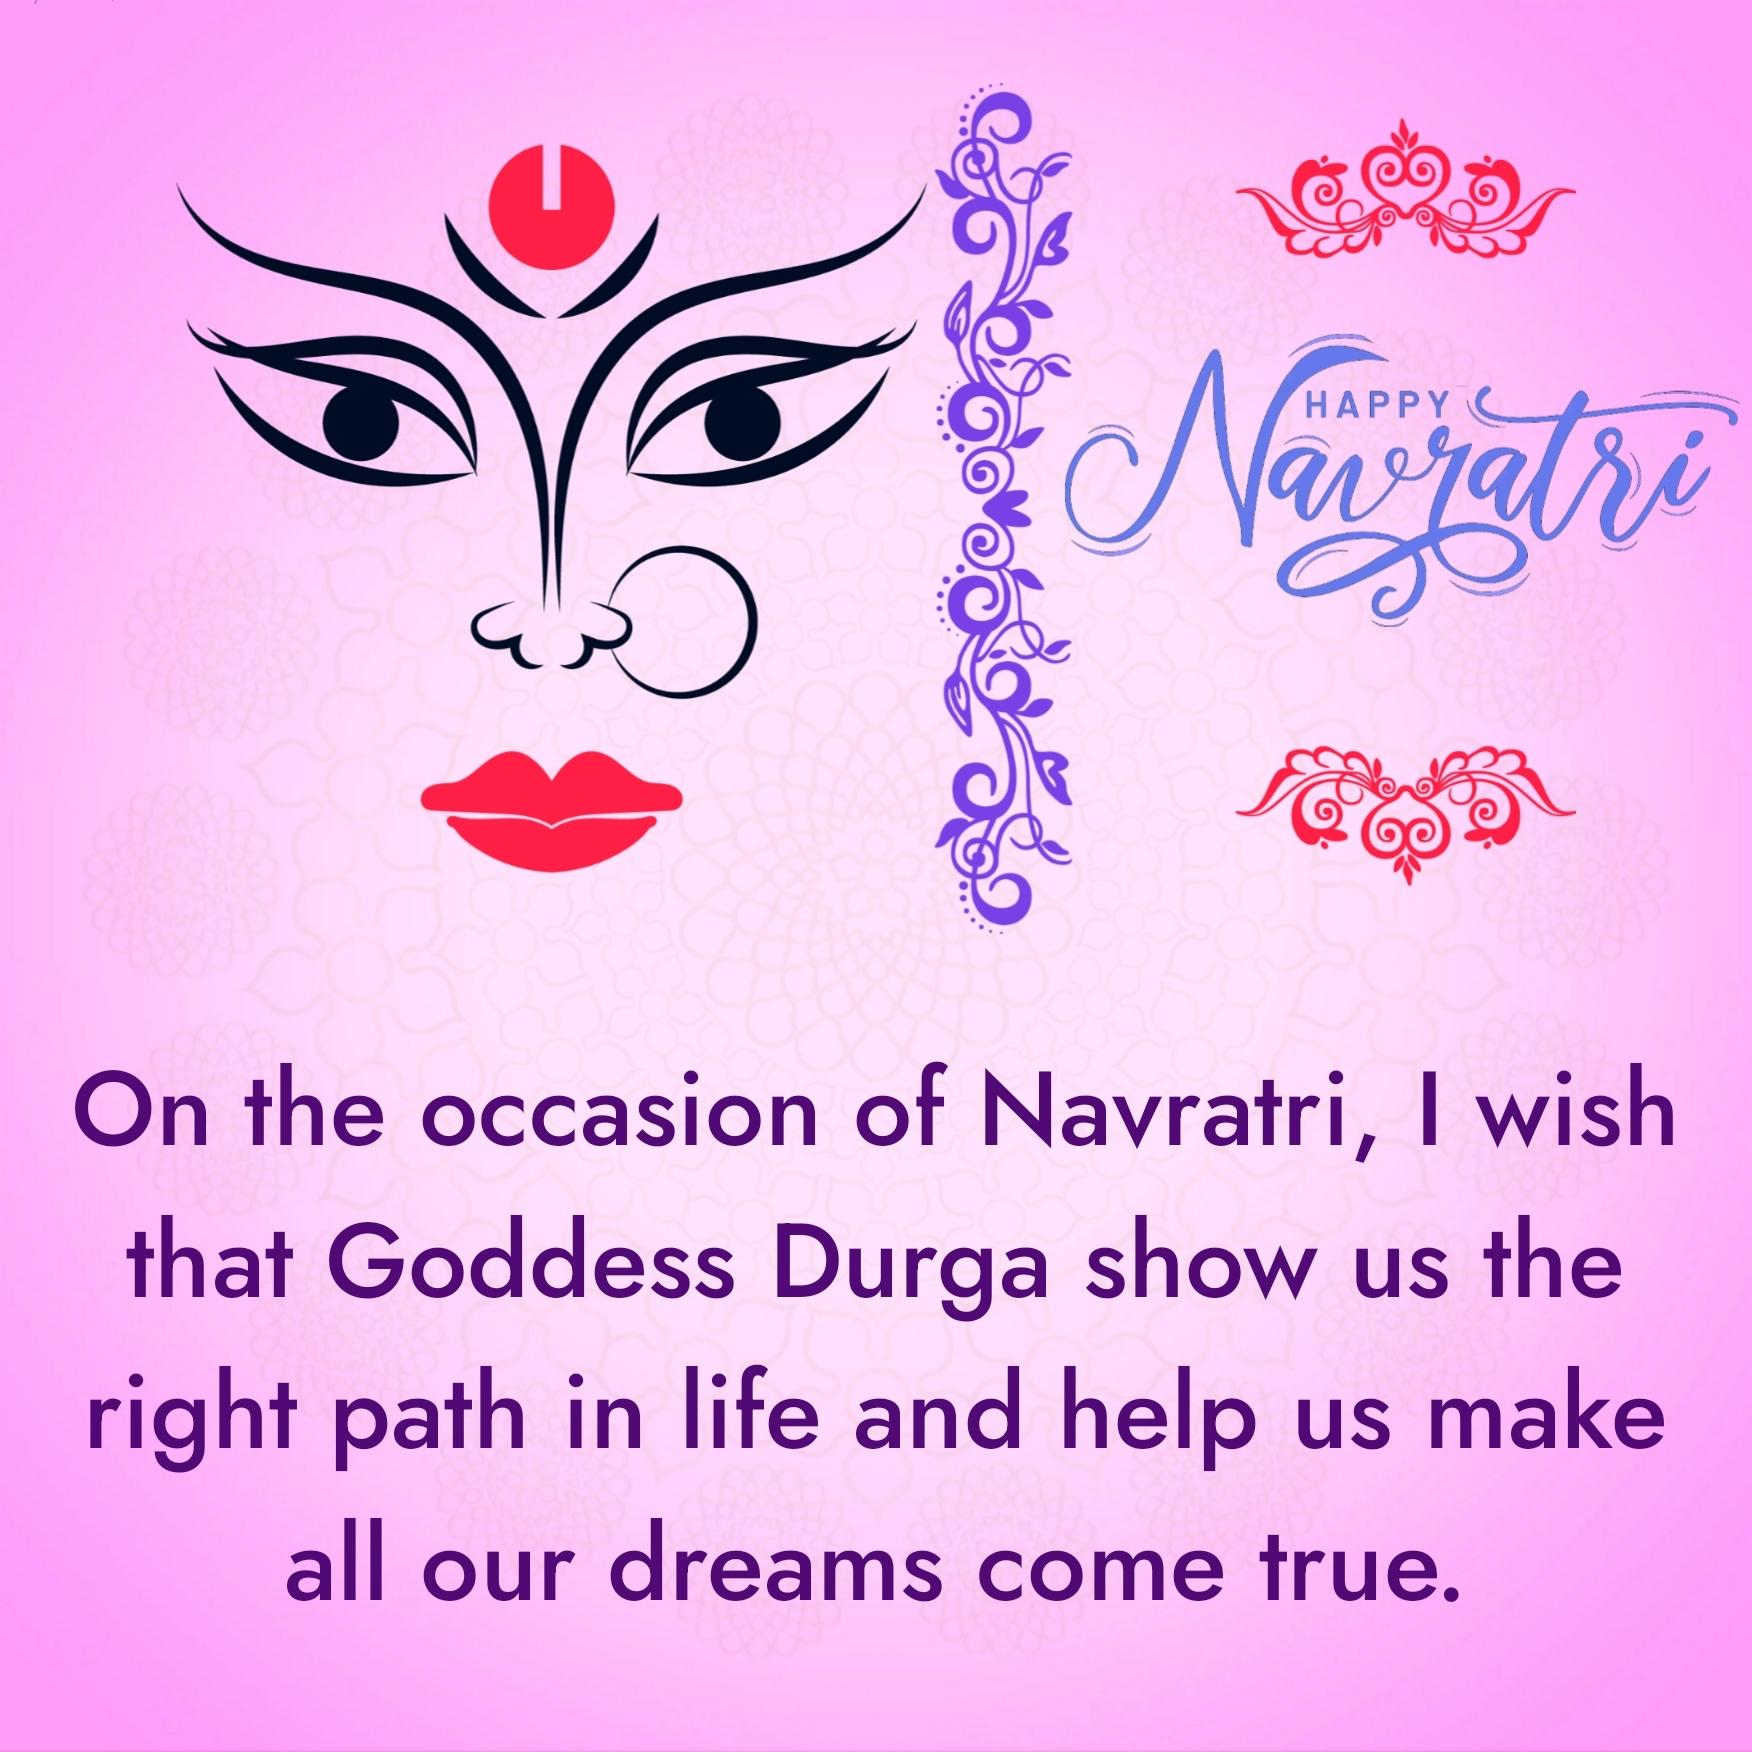 On the occasion of Navratri I wish that Goddess Durga